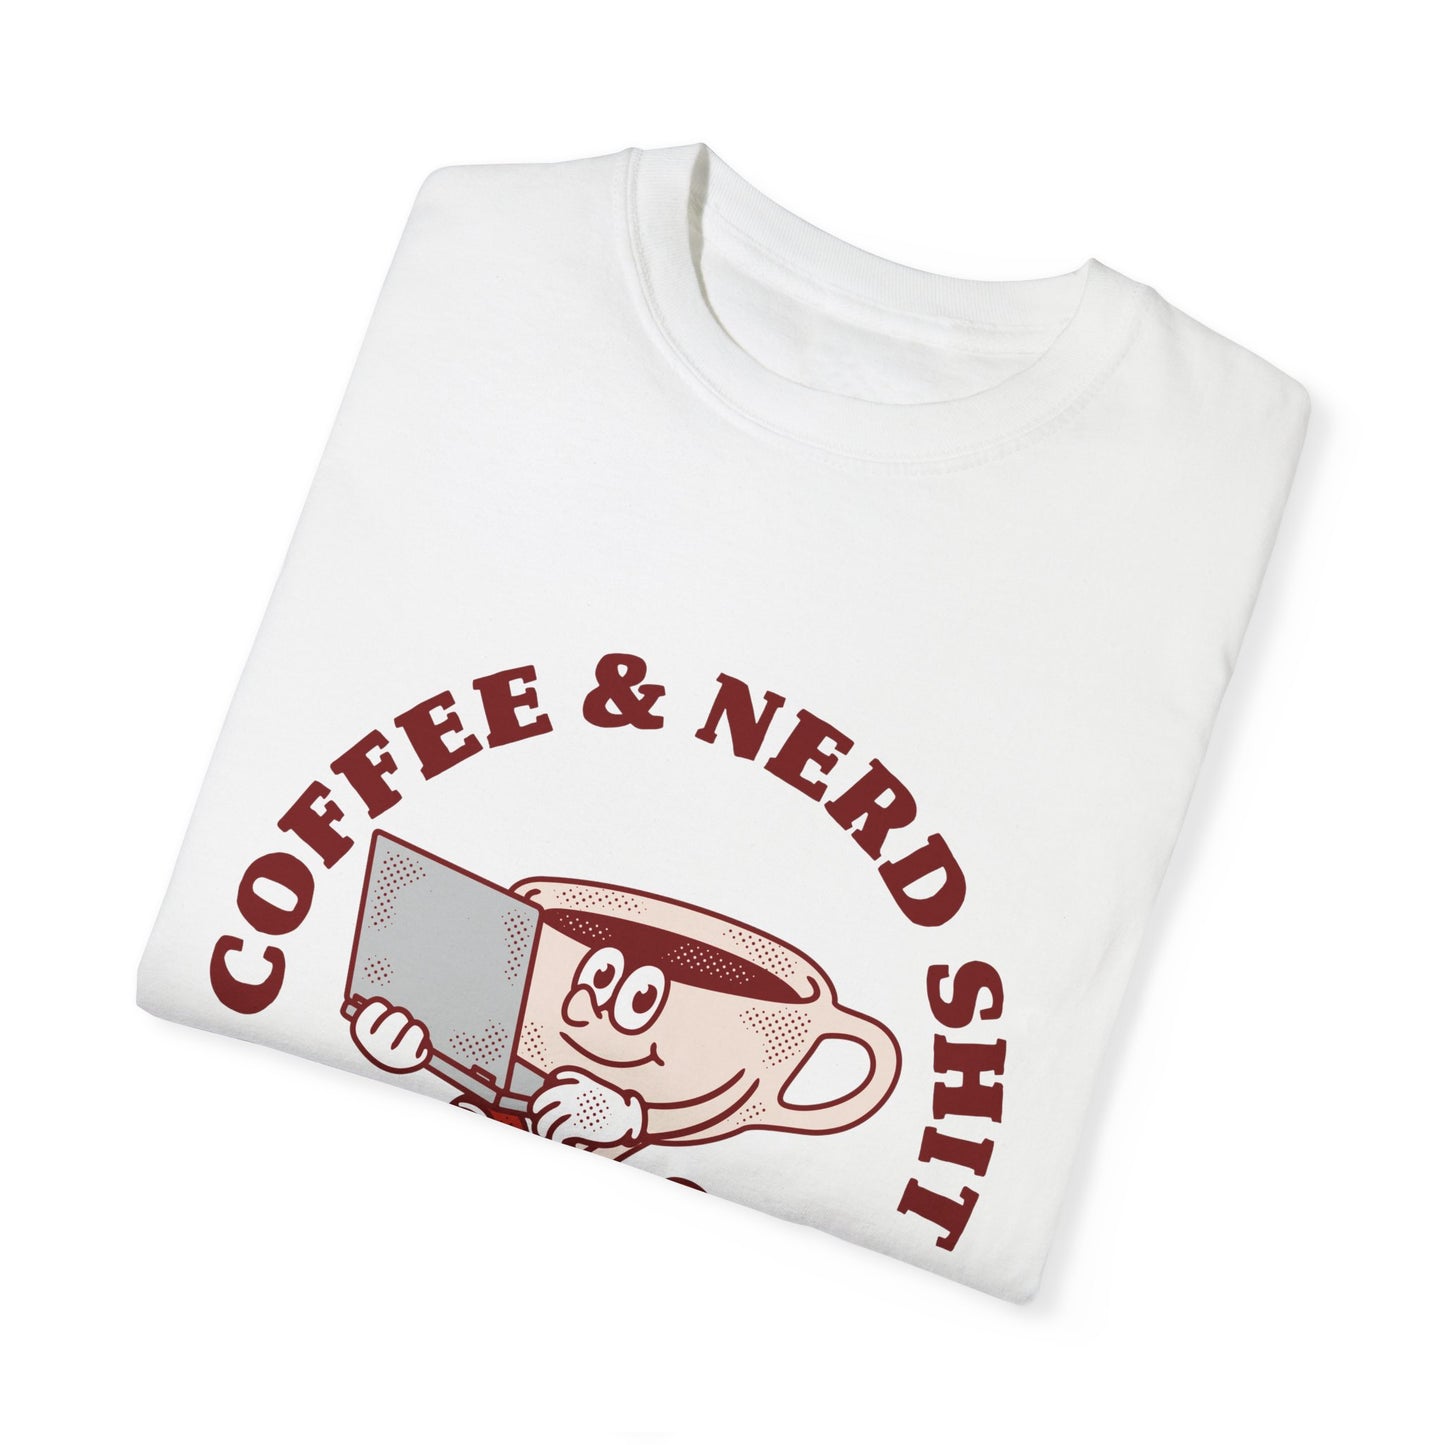 Coffee & Nerd Shit Cartoon Tee